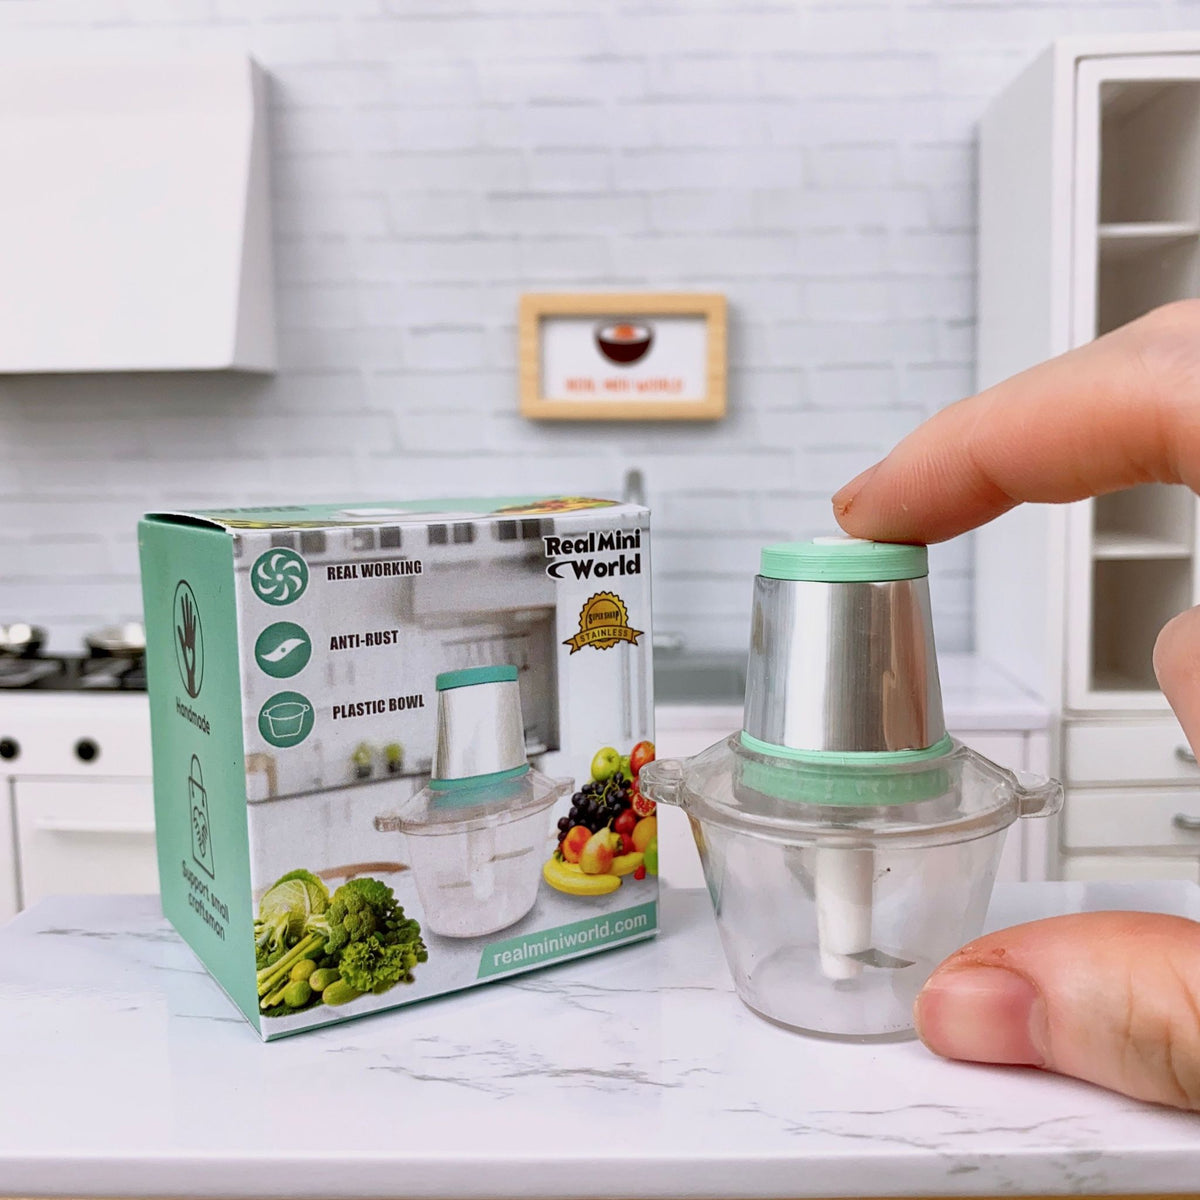 Real Working Miniature Tape Dispenser Cutter – Real Mini World